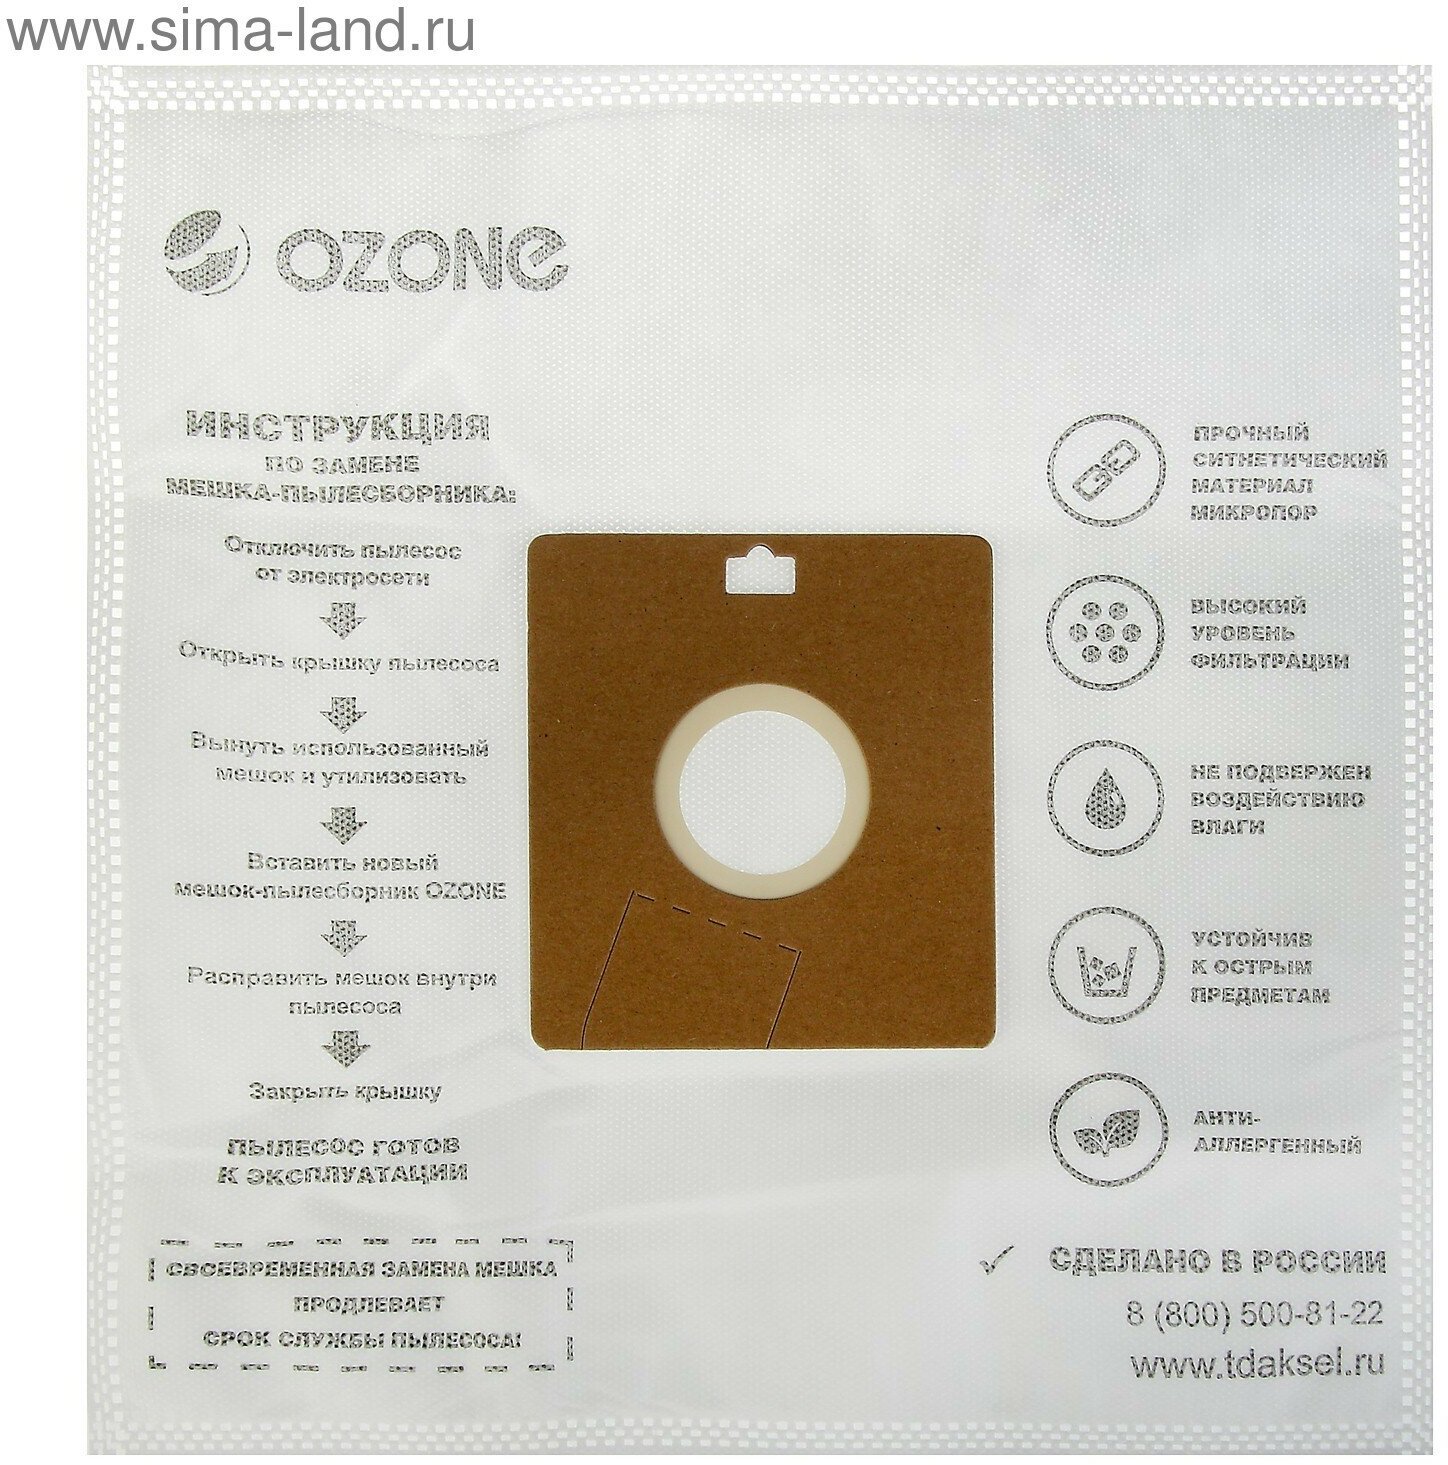 Пылесборник синтетический Ozone micron M-03, 5 шт (Samsung VP-77 )